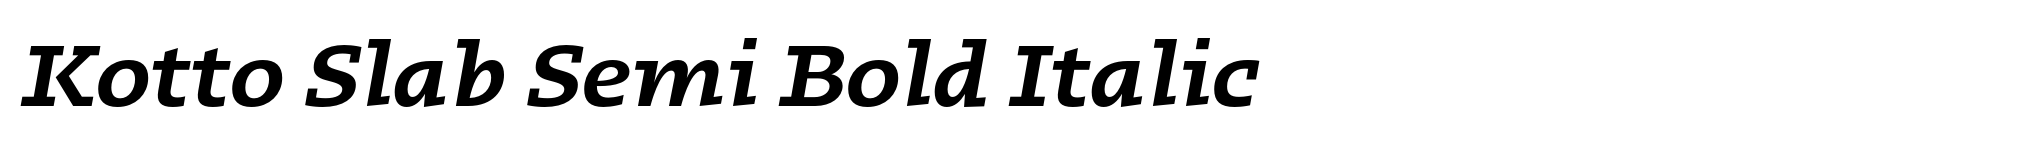 Kotto Slab Semi Bold Italic image